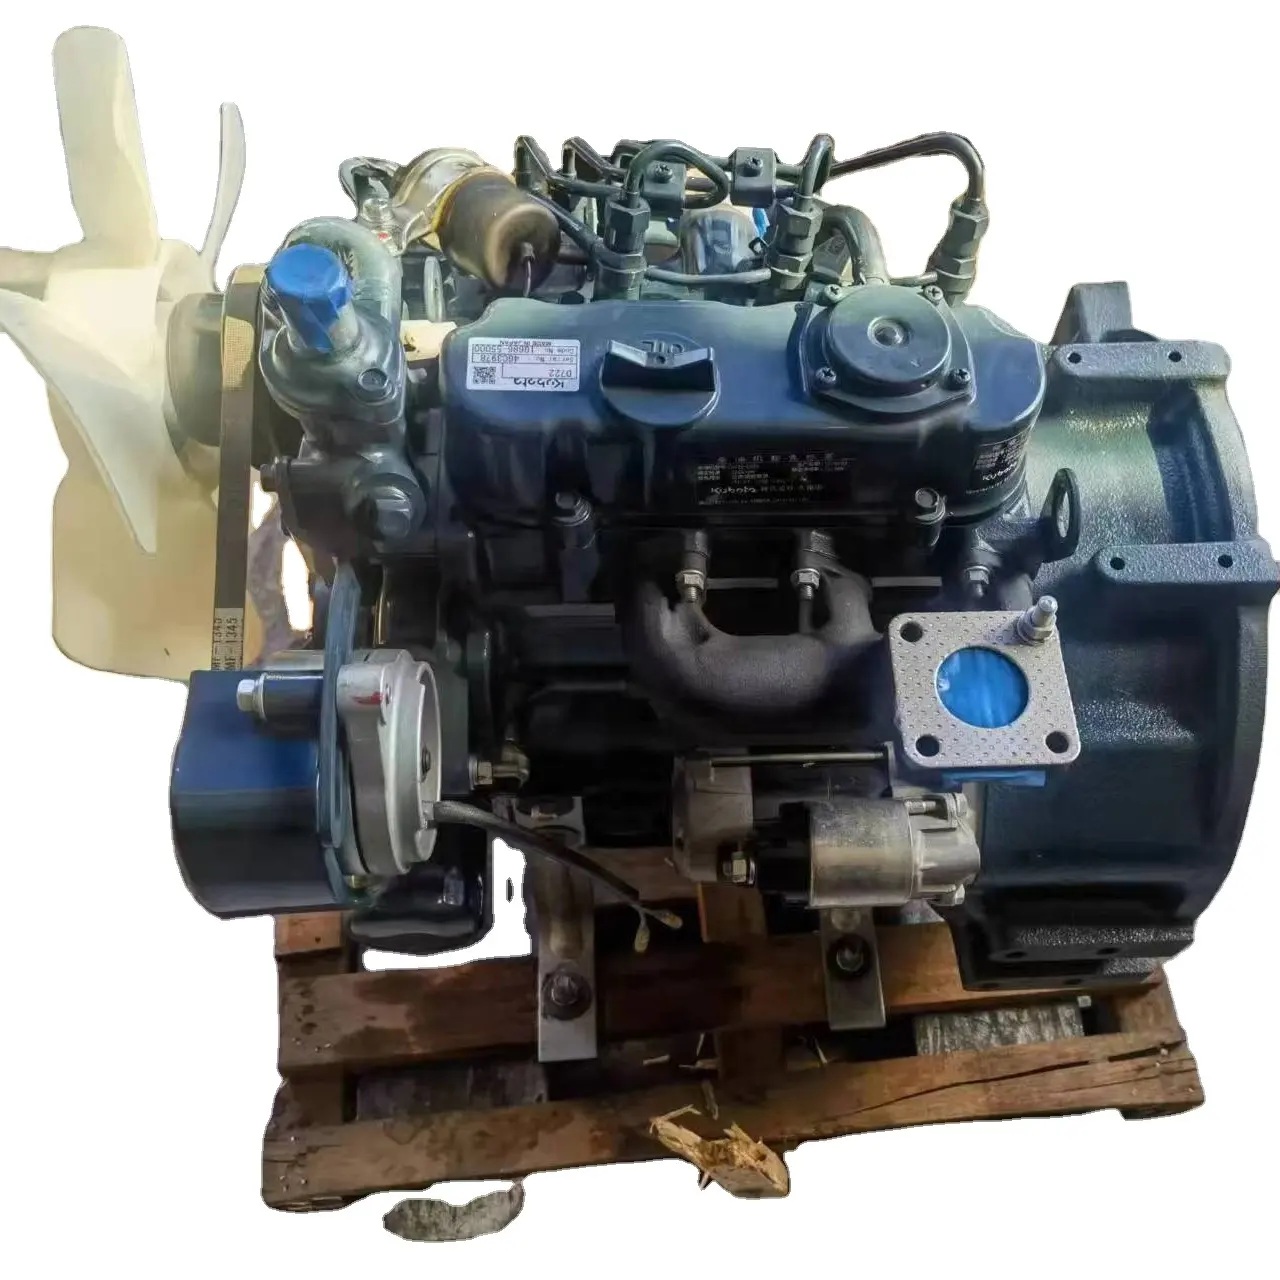 Montaje de motor diésel ubota 722, motor ngine otor xcavator iesel omplete